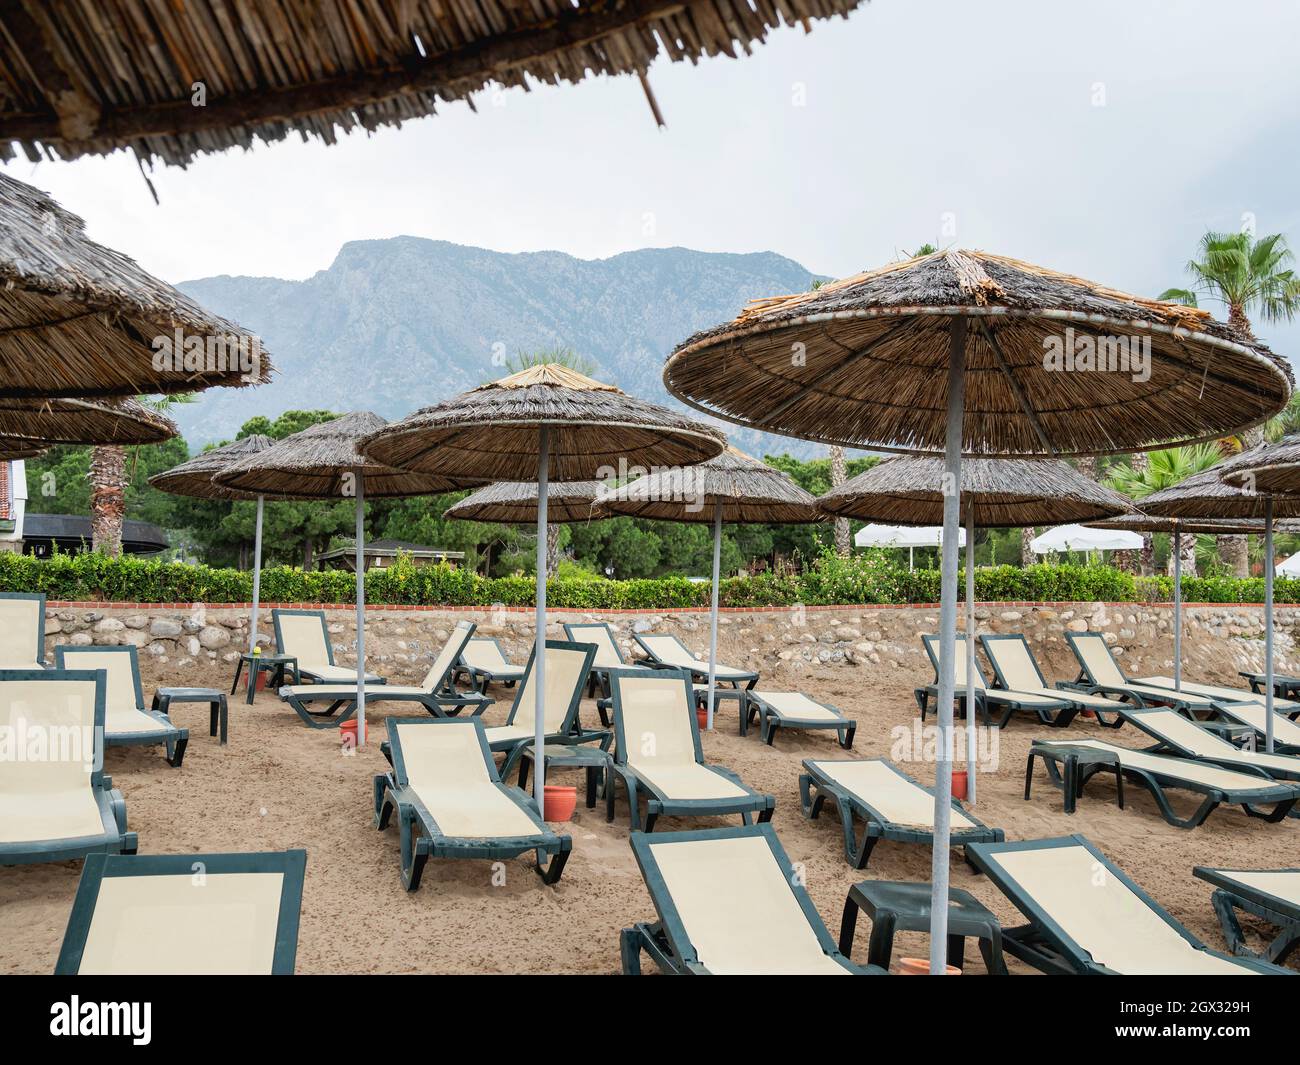 Deserted Hotel In Turkey. Empty Deck Chairs Under Palm Trees. Quarantine Coronavirus Covid-19. Stock Photo